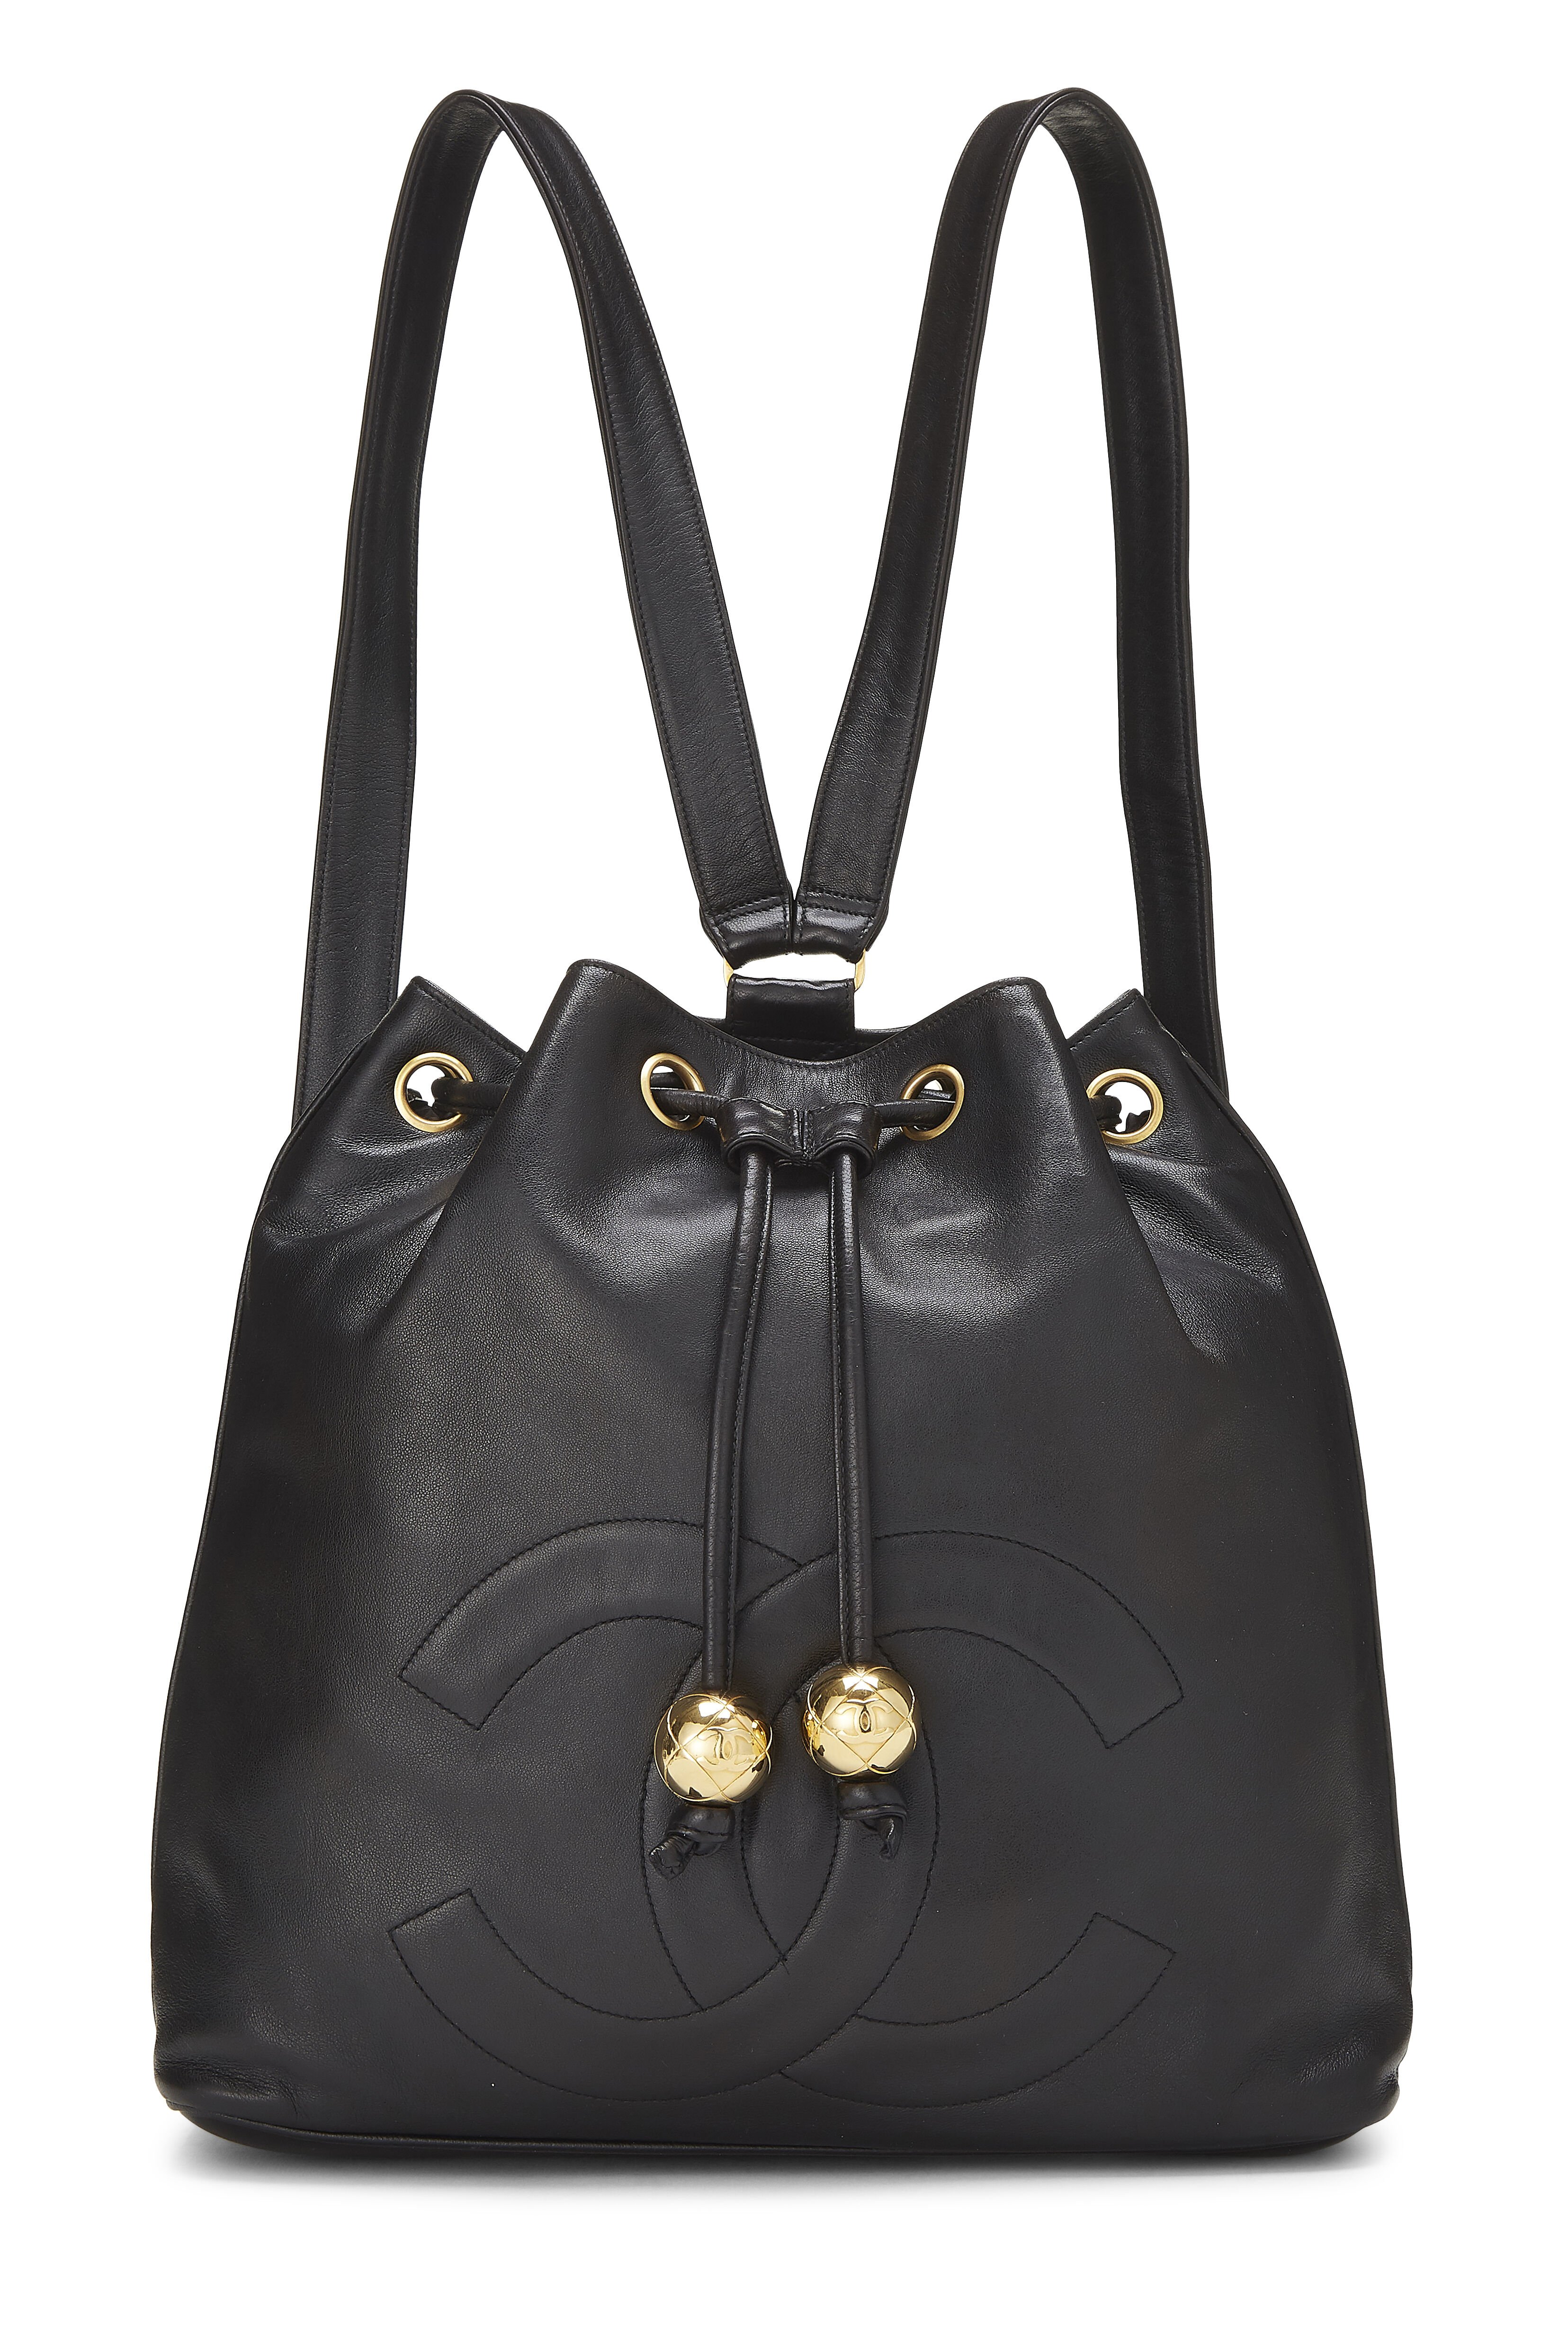 Pre-owned Chanel Black Lambskin Bucket Backpack Medium